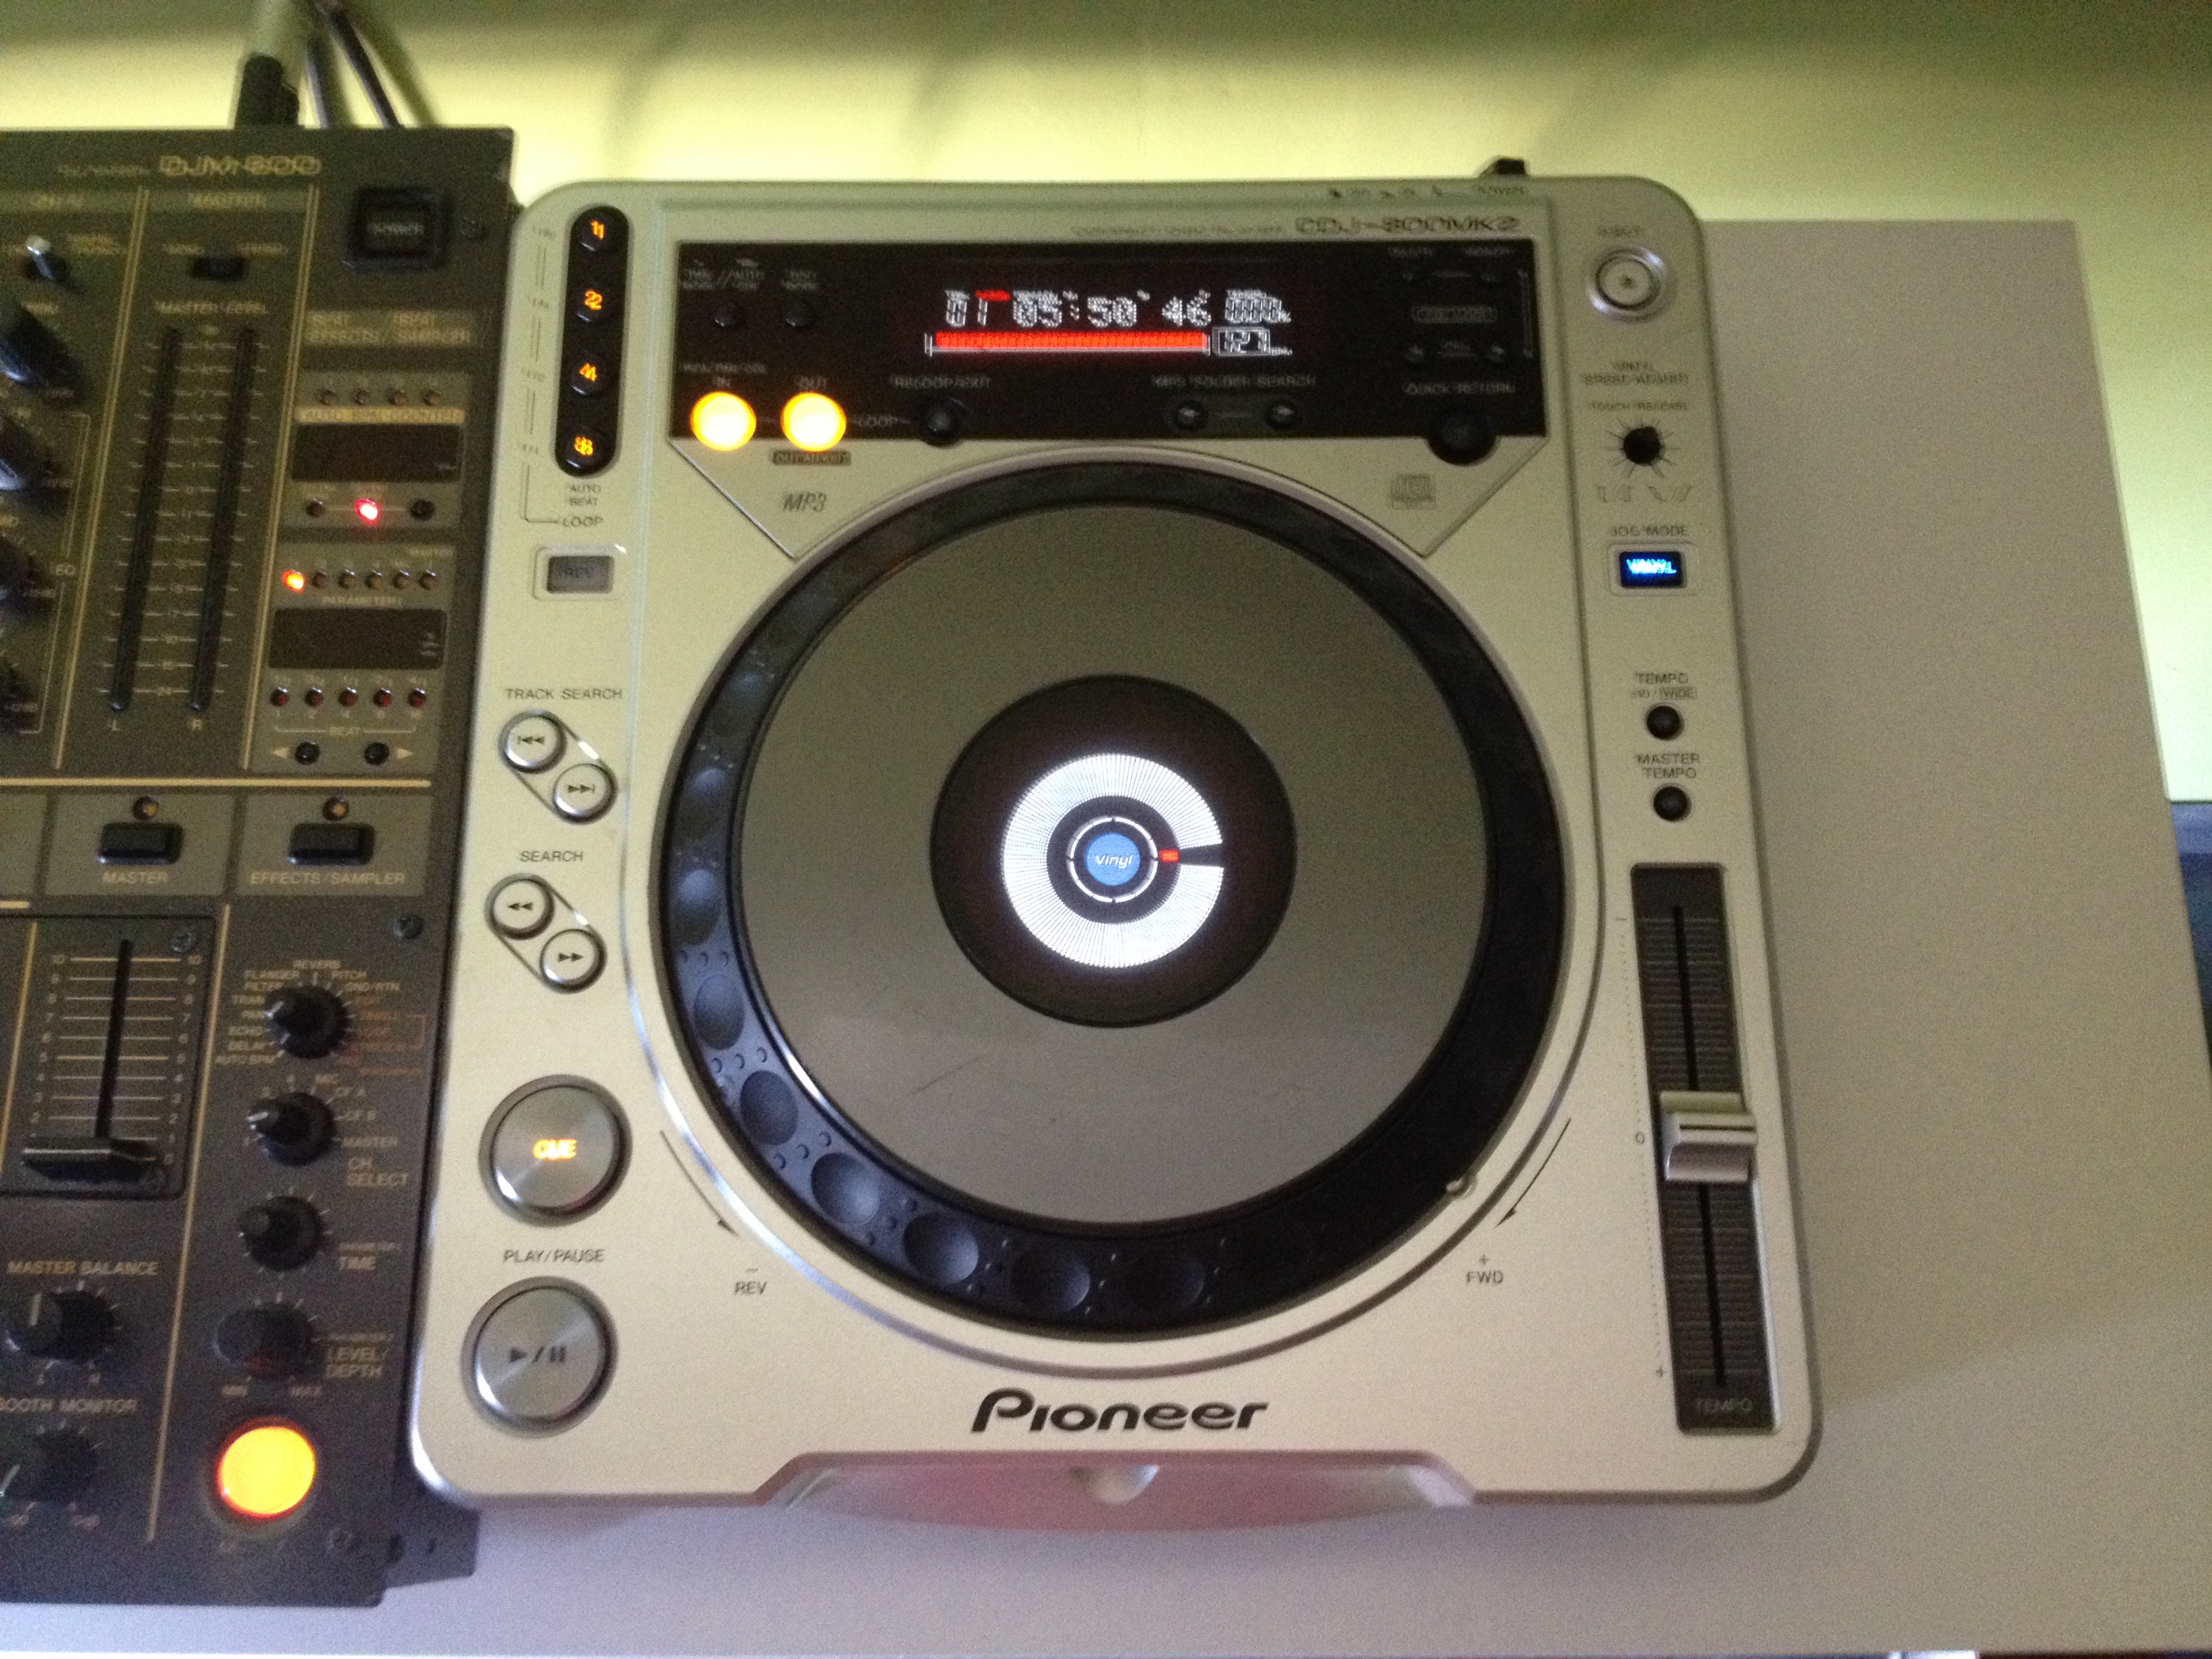 Achat Pioneer CDJ-800 MK2 d'occasion - Audiofanzine